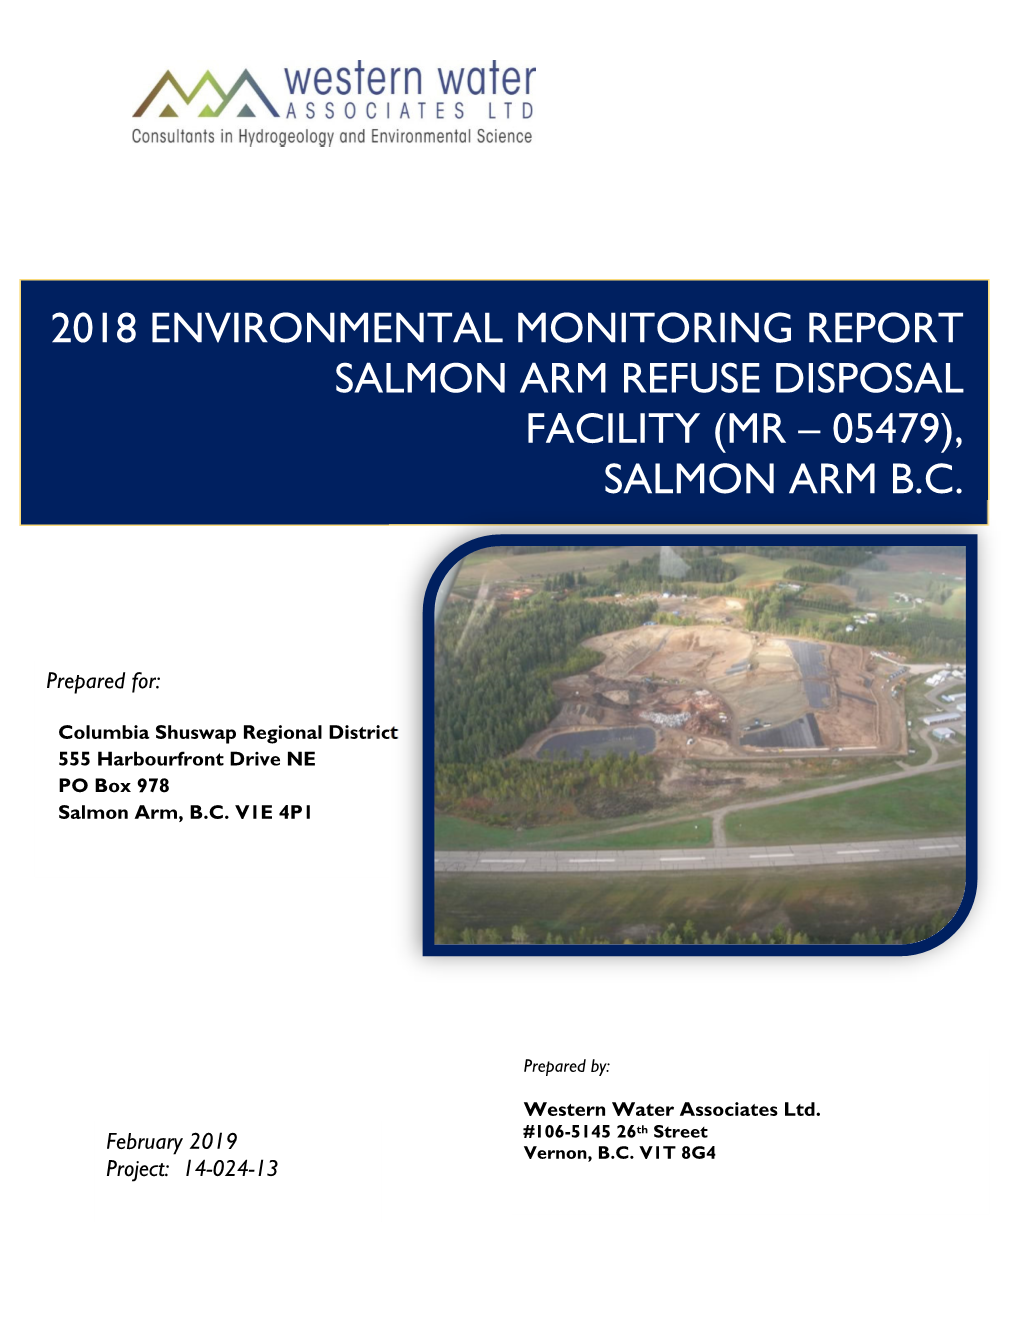 2018 Environmental Monitoring Report Salmon Arm Refuse Disposal Facility (Mr – 05479), Salmon Arm B.C